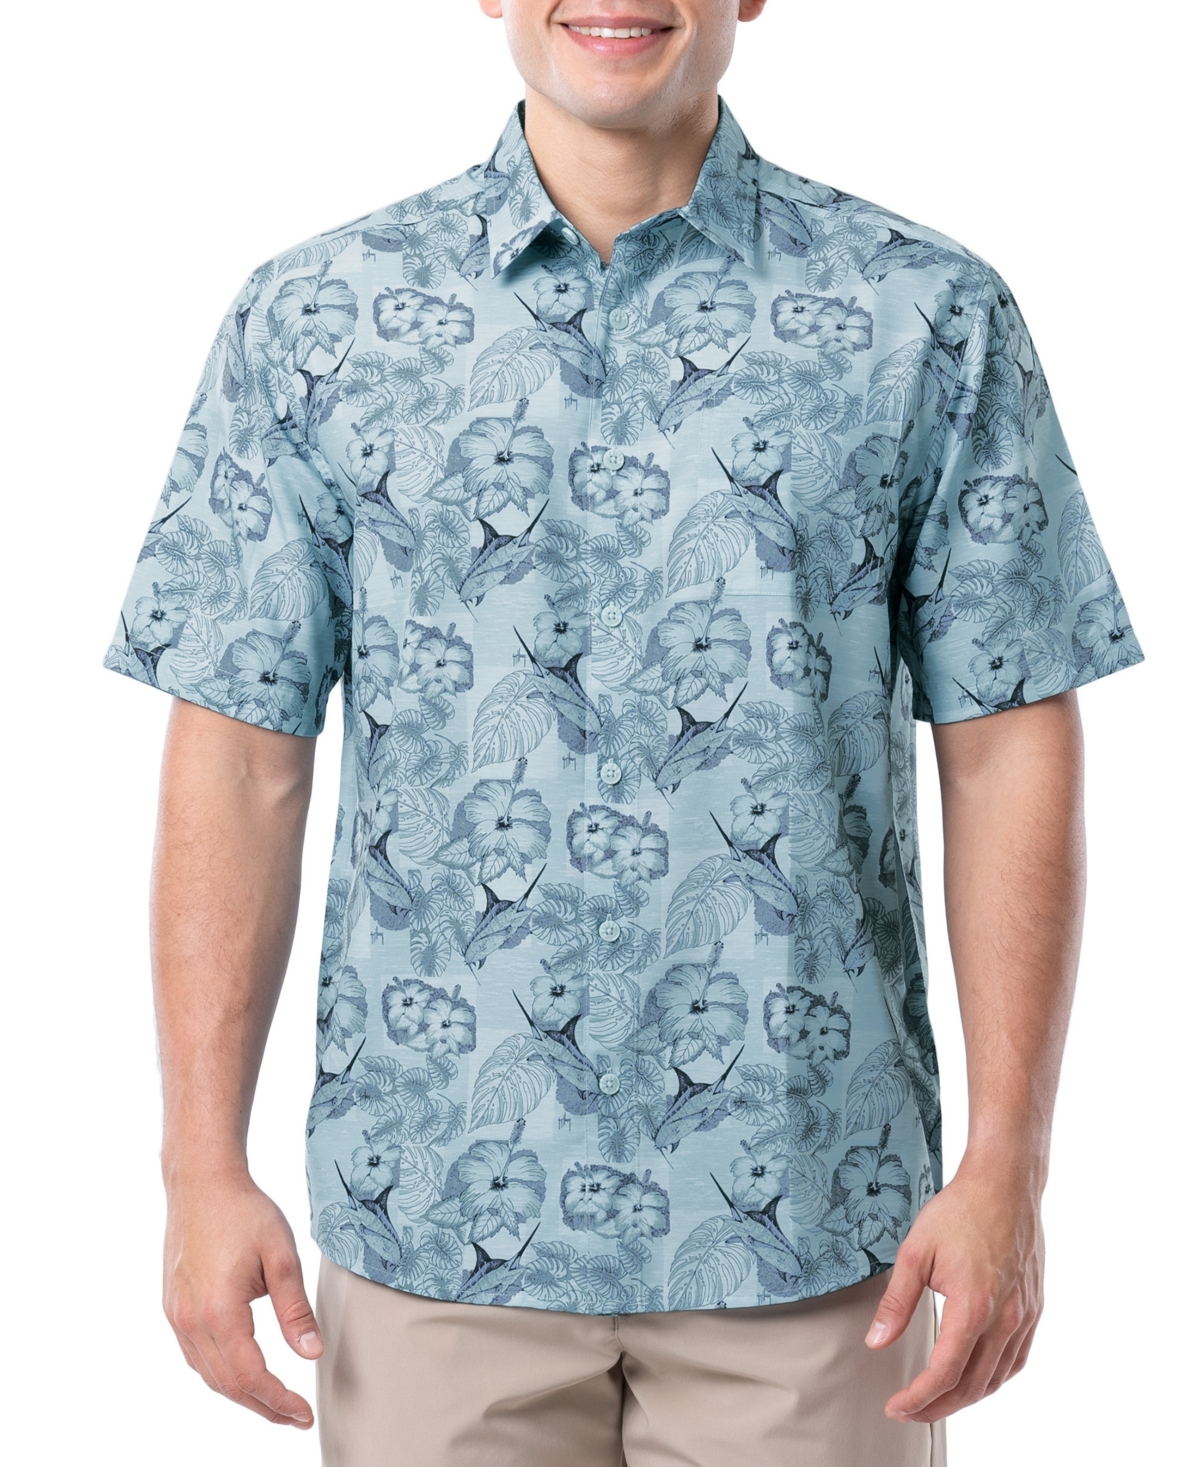 Men's Short-Sleeve Marlin Floral Fishing Shirt - Iced Aqua